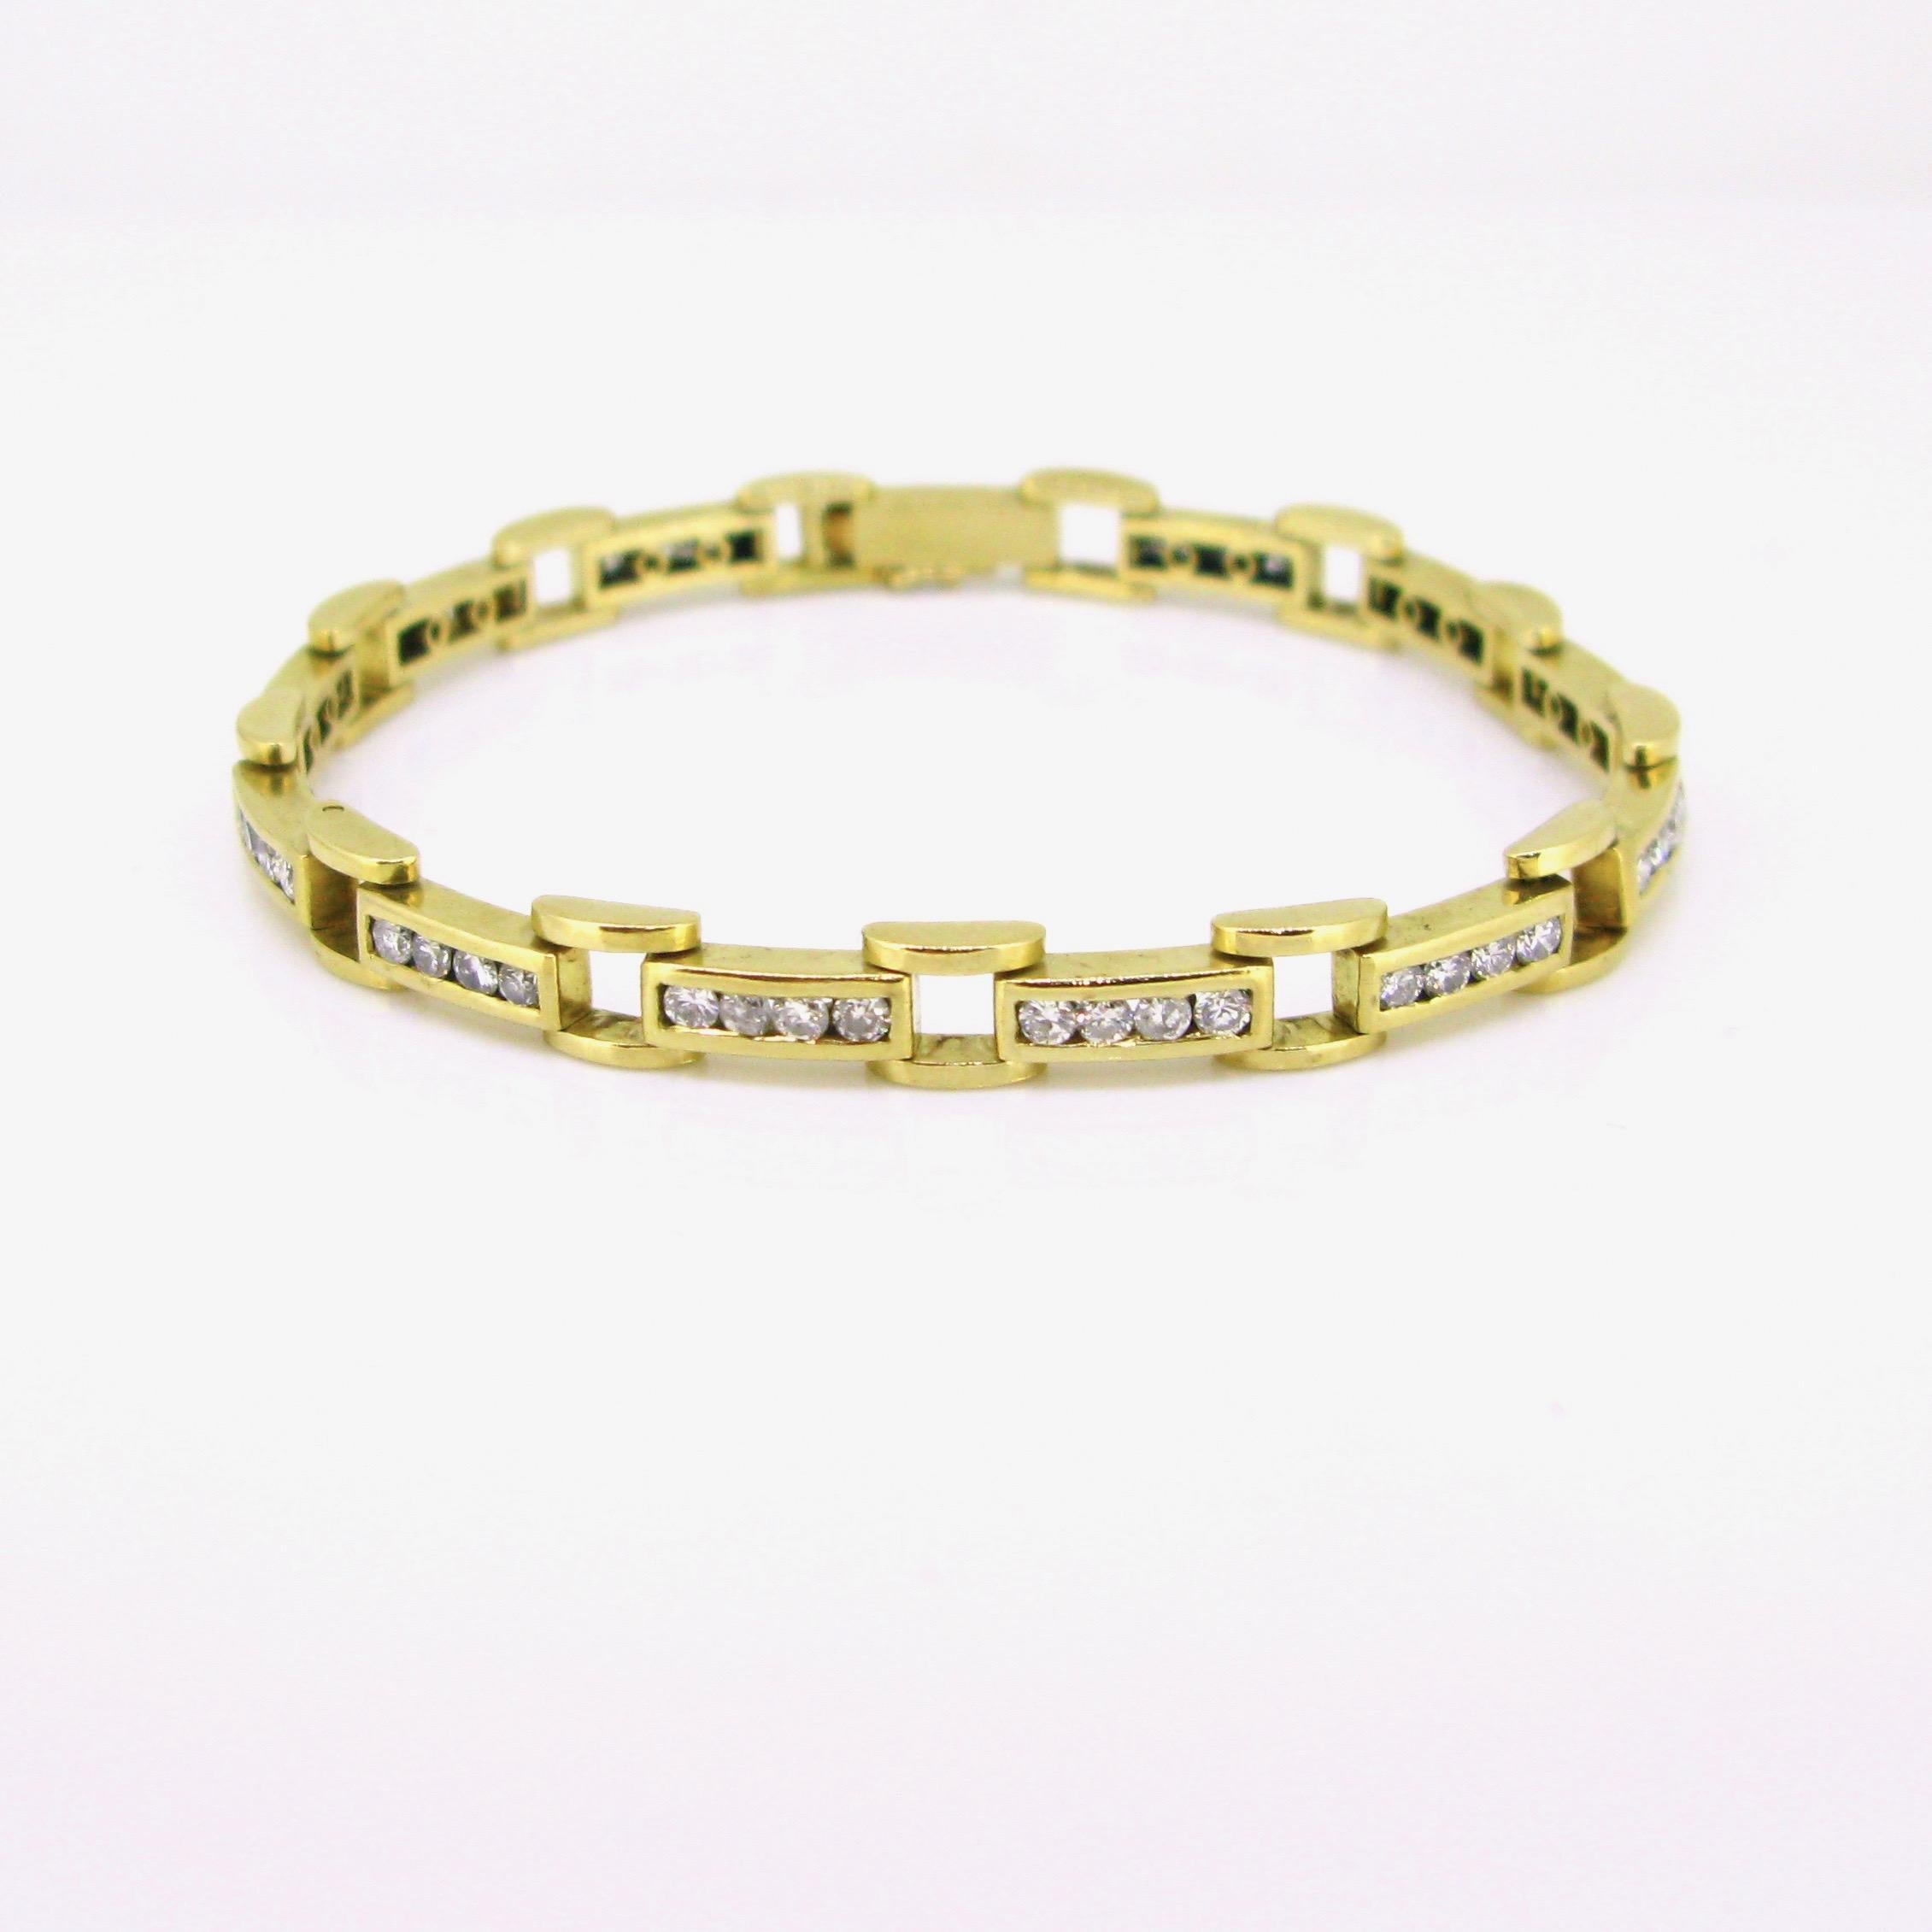 Brilliant Cut Vintage 2.60 Carat Diamonds Tennis Bracelet, 18 Karat Yellow Gold, France